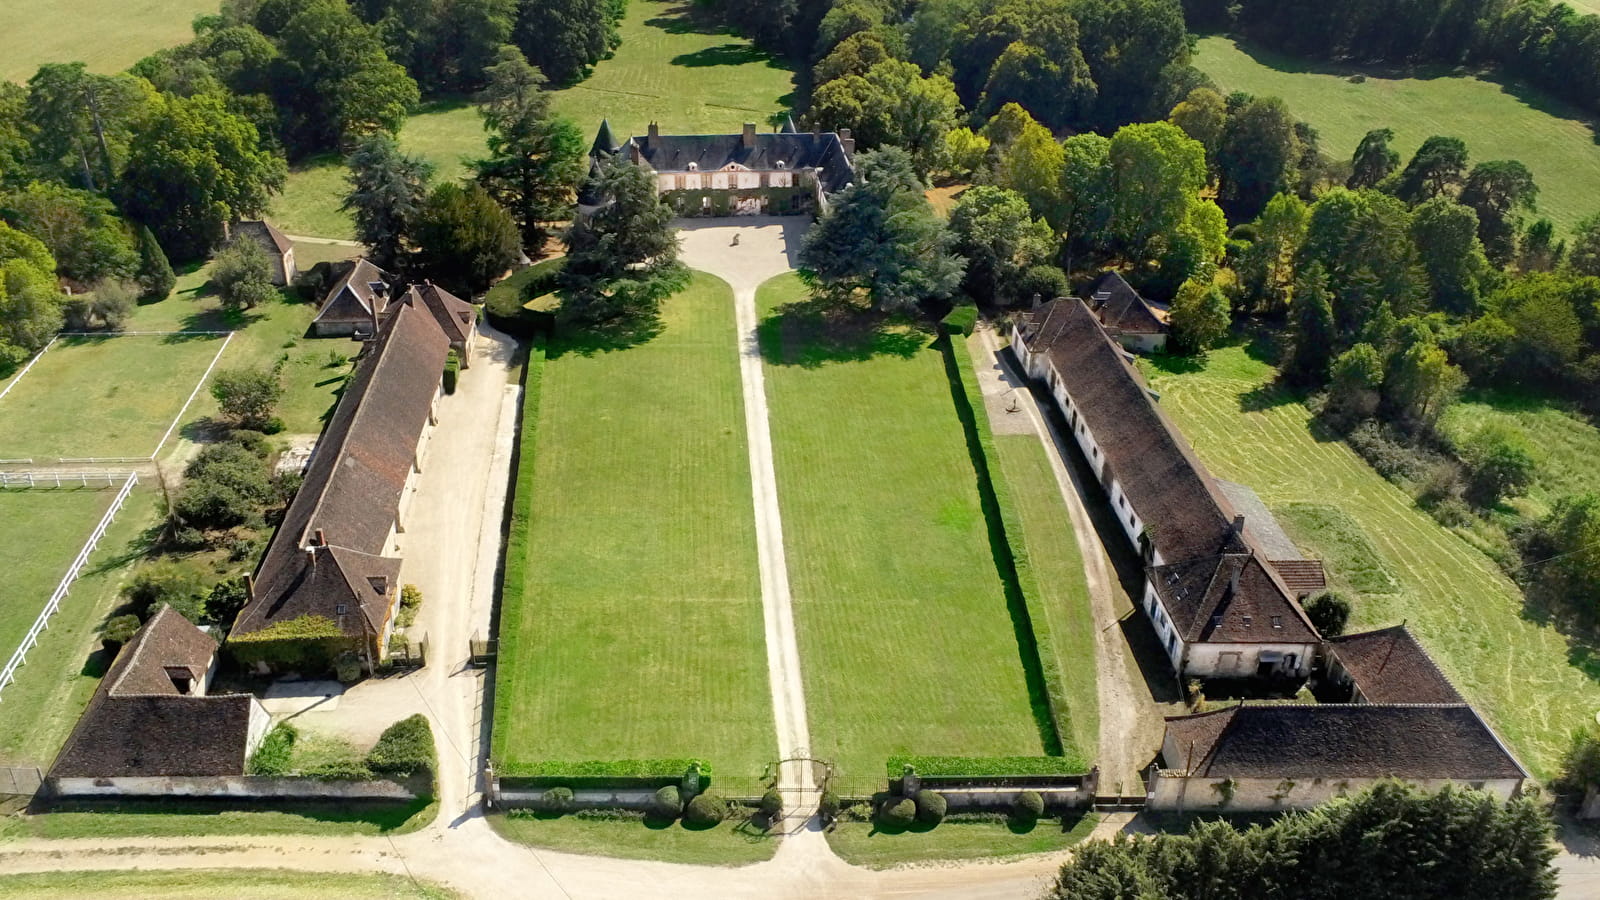 Château de Montigny